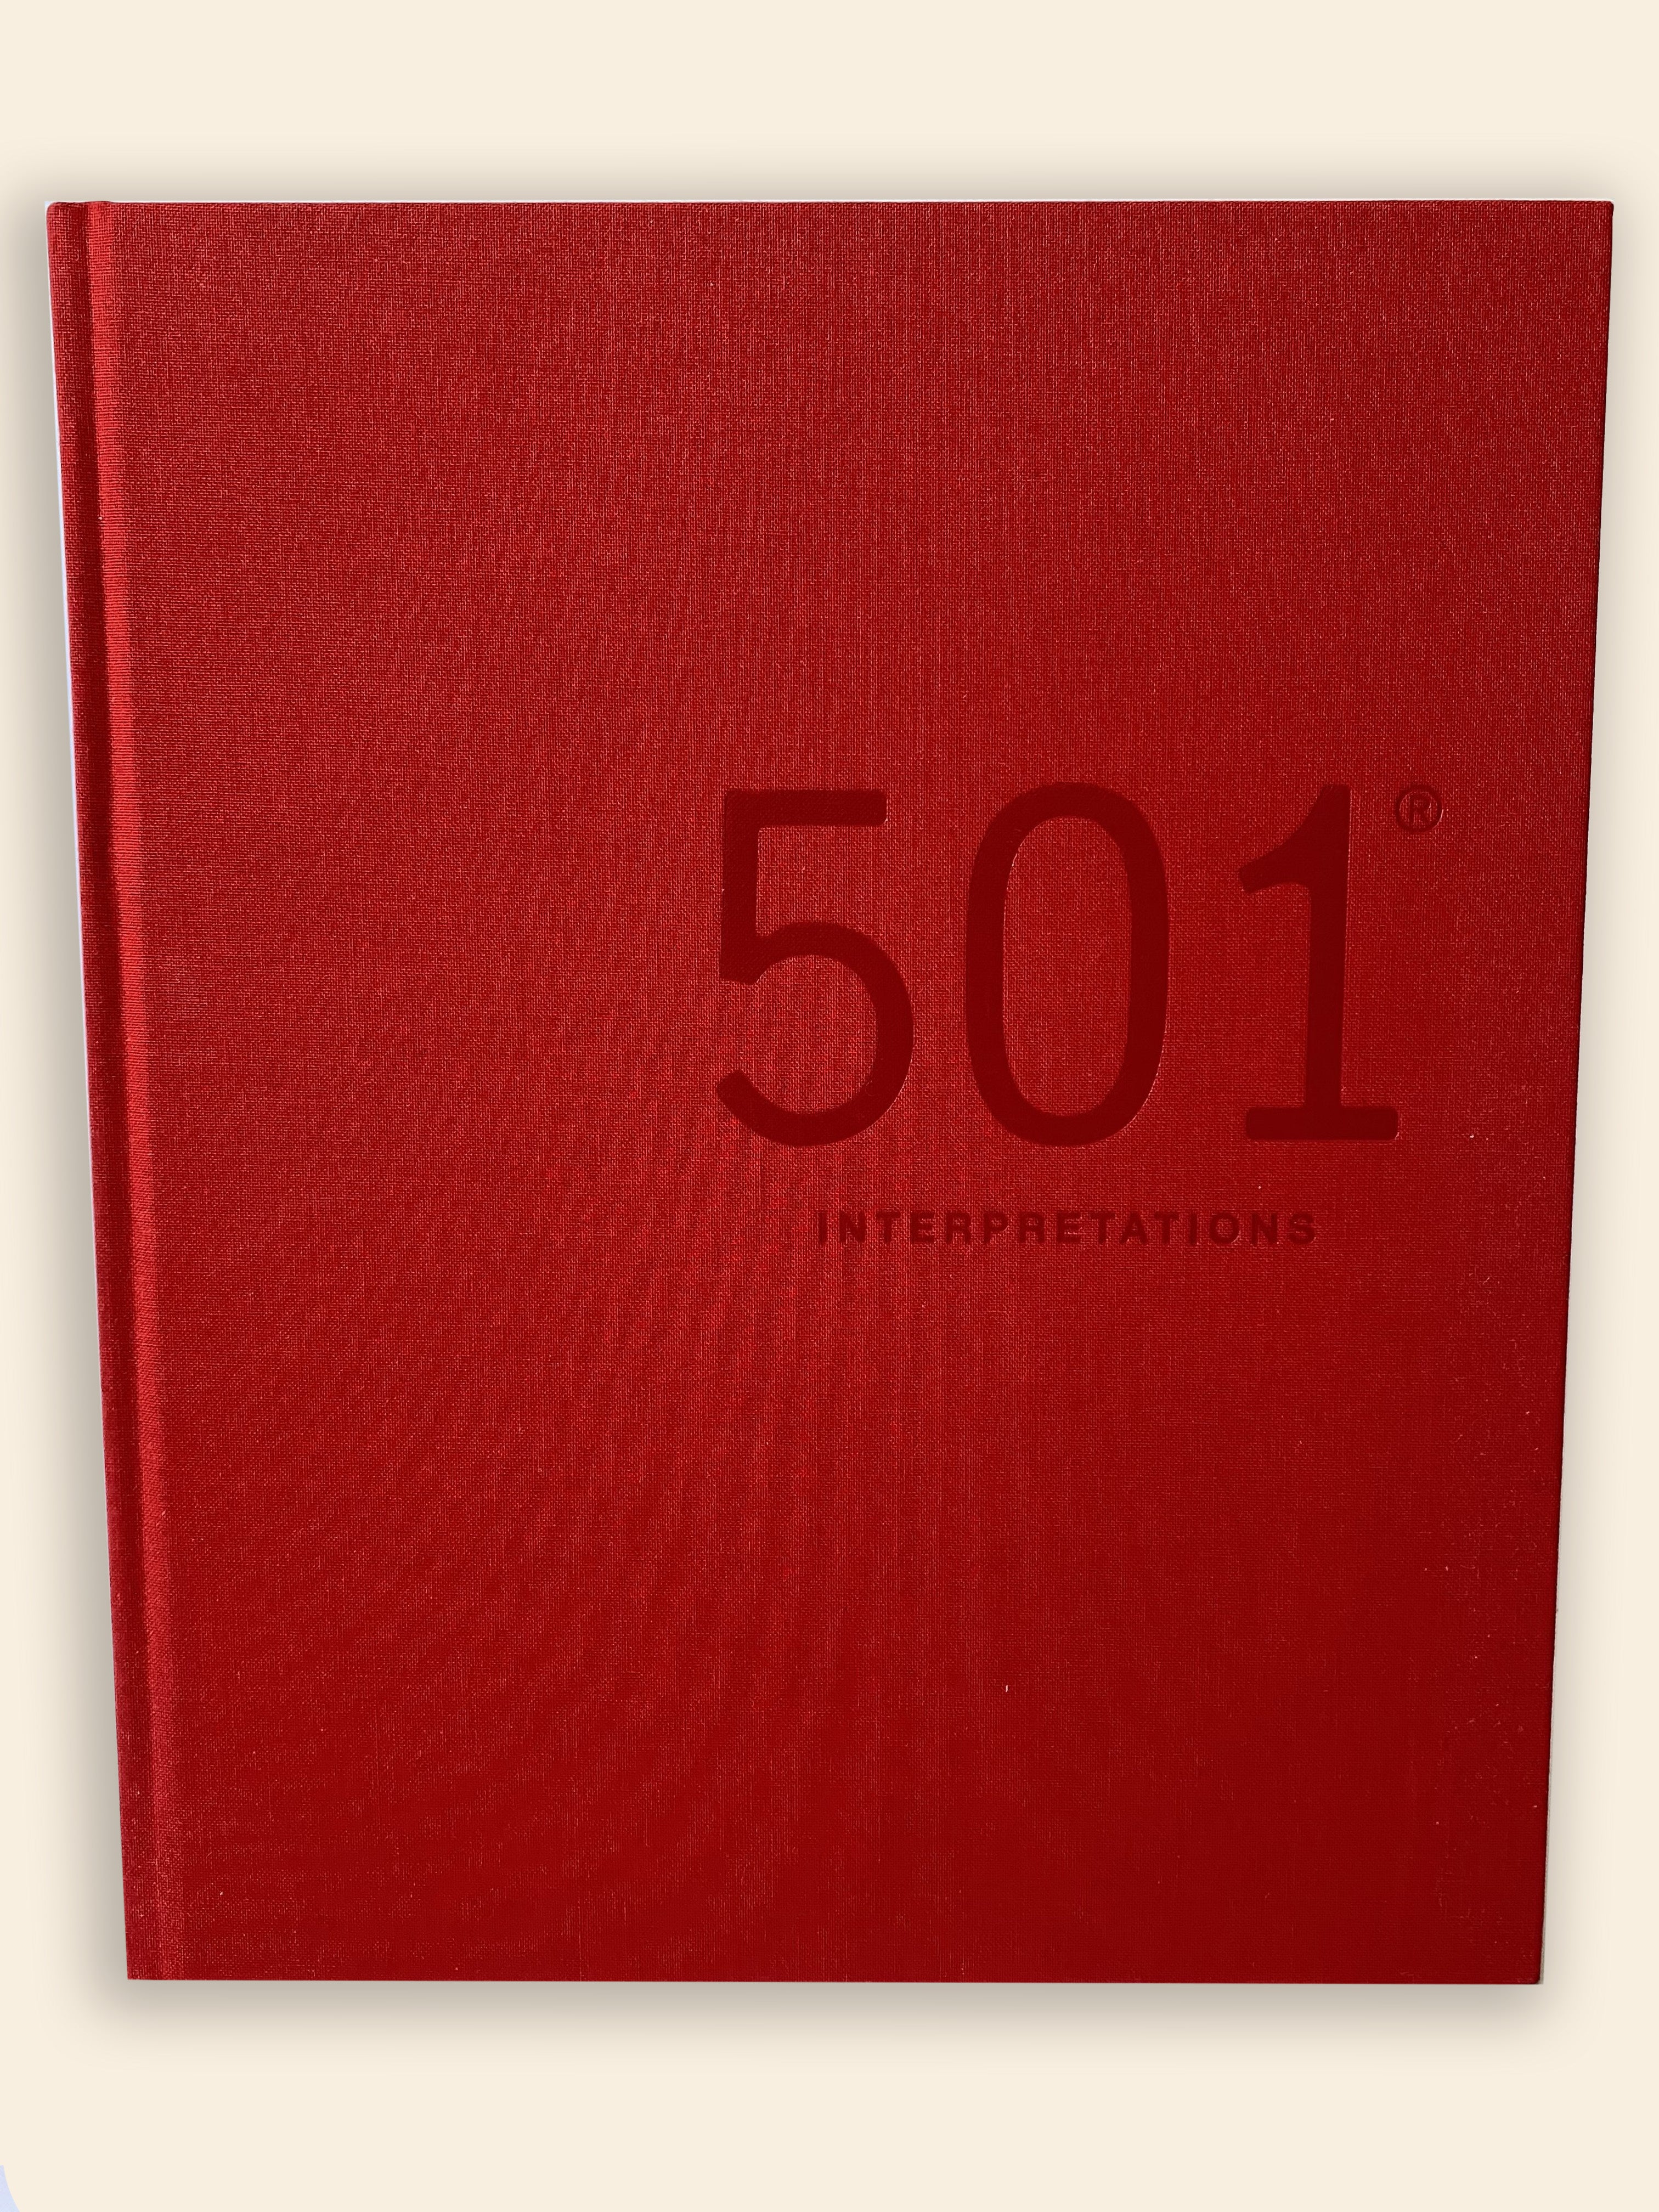 Levi's 501 Interpretations Book | Edition 210/501 | A Novel Afternoon